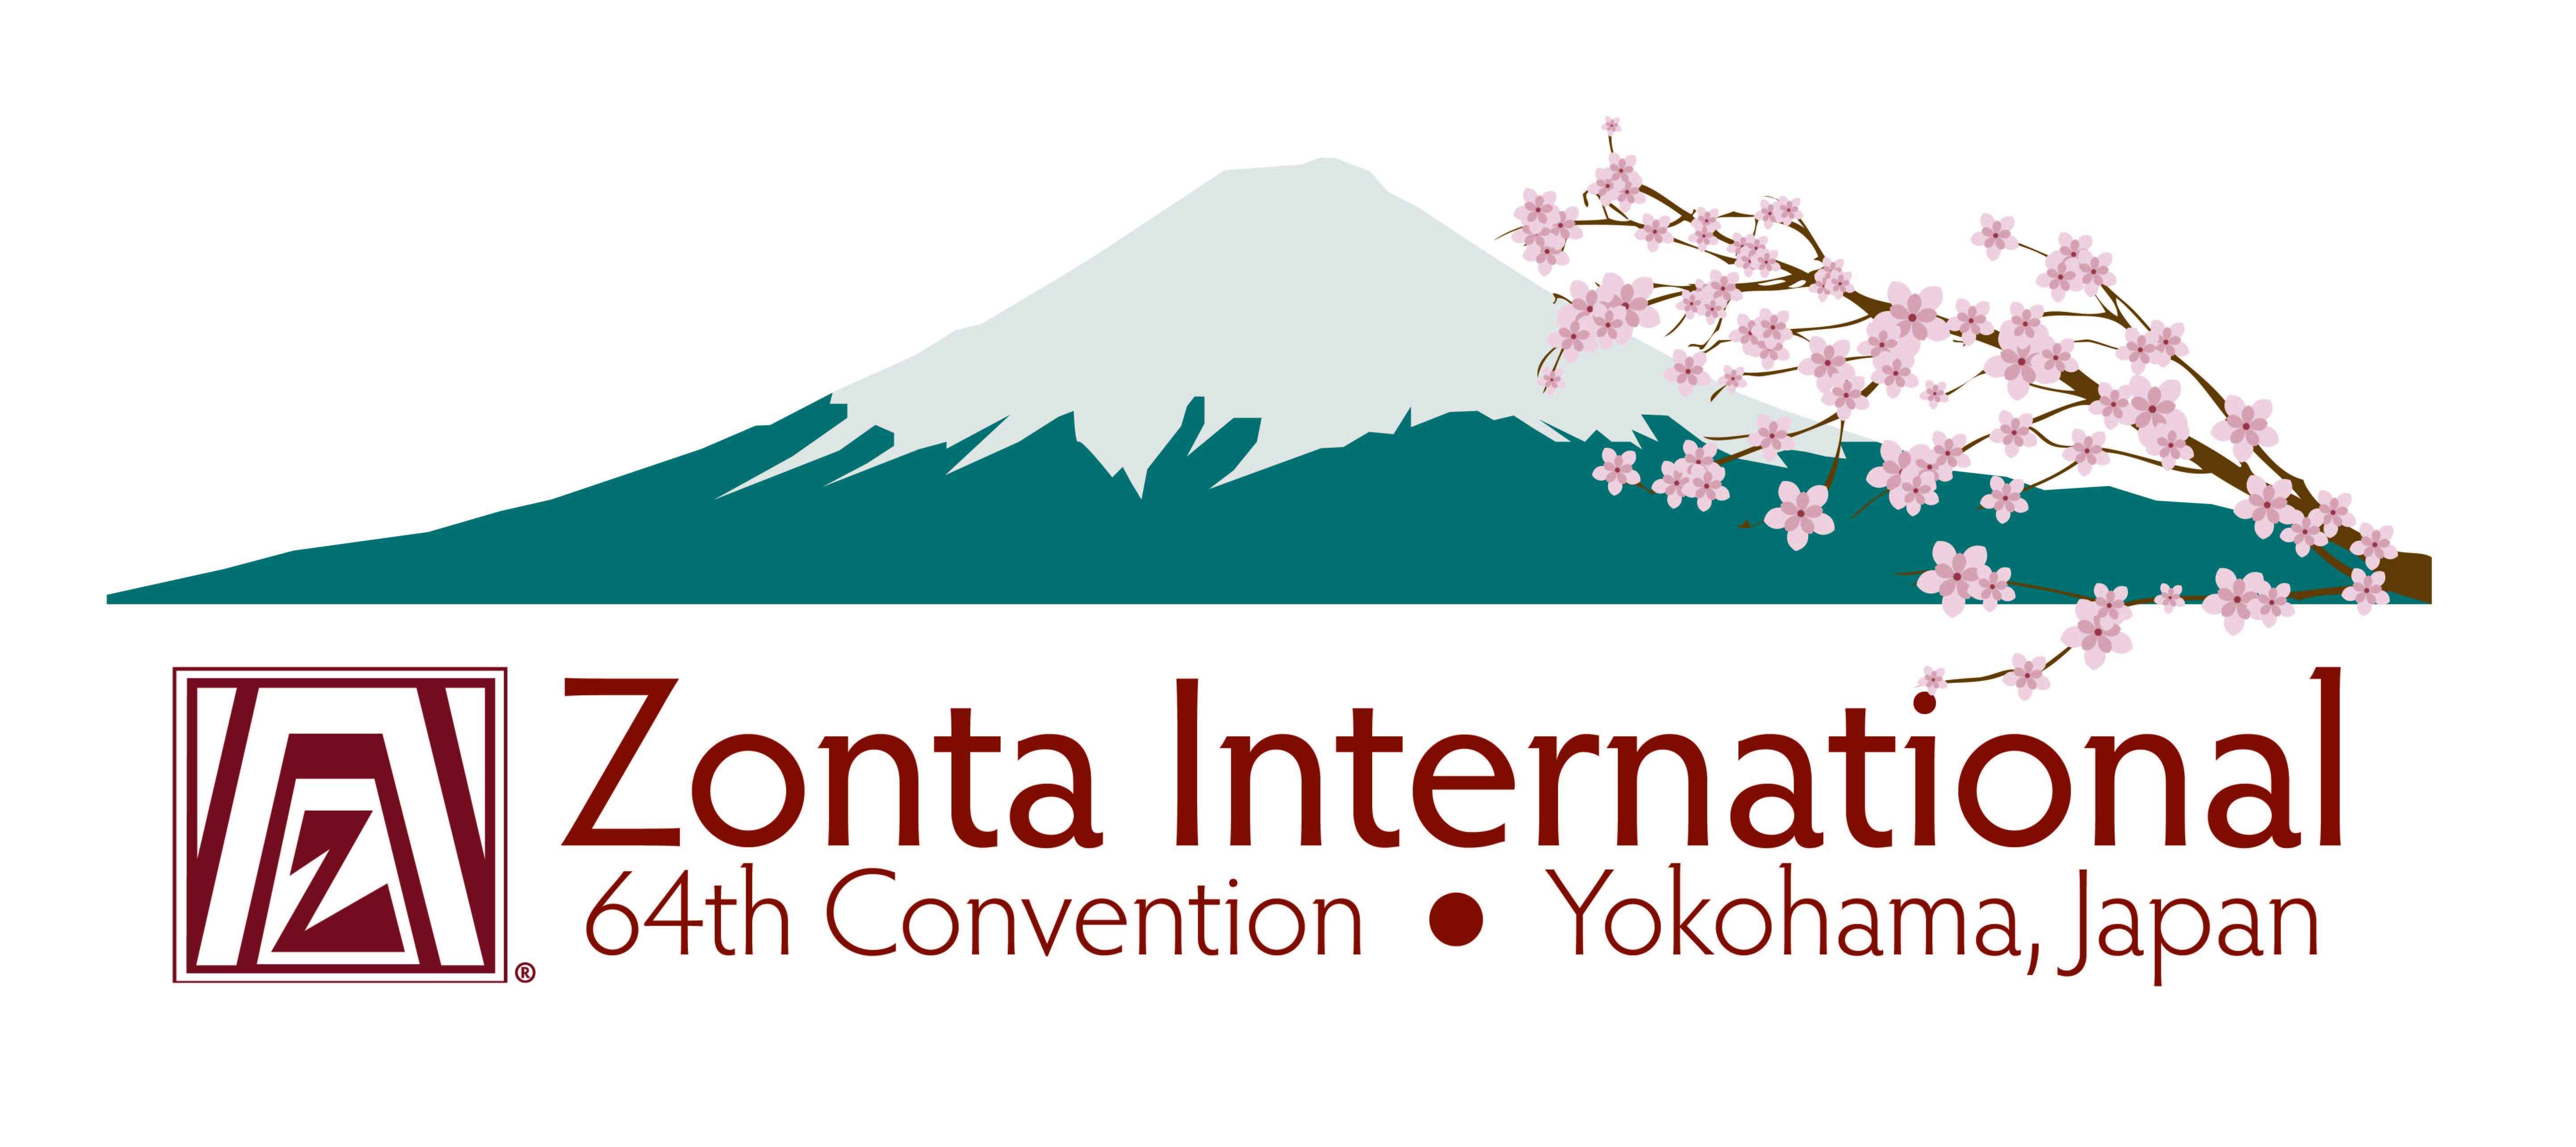 2018 Zonta International Convention logo.jpg